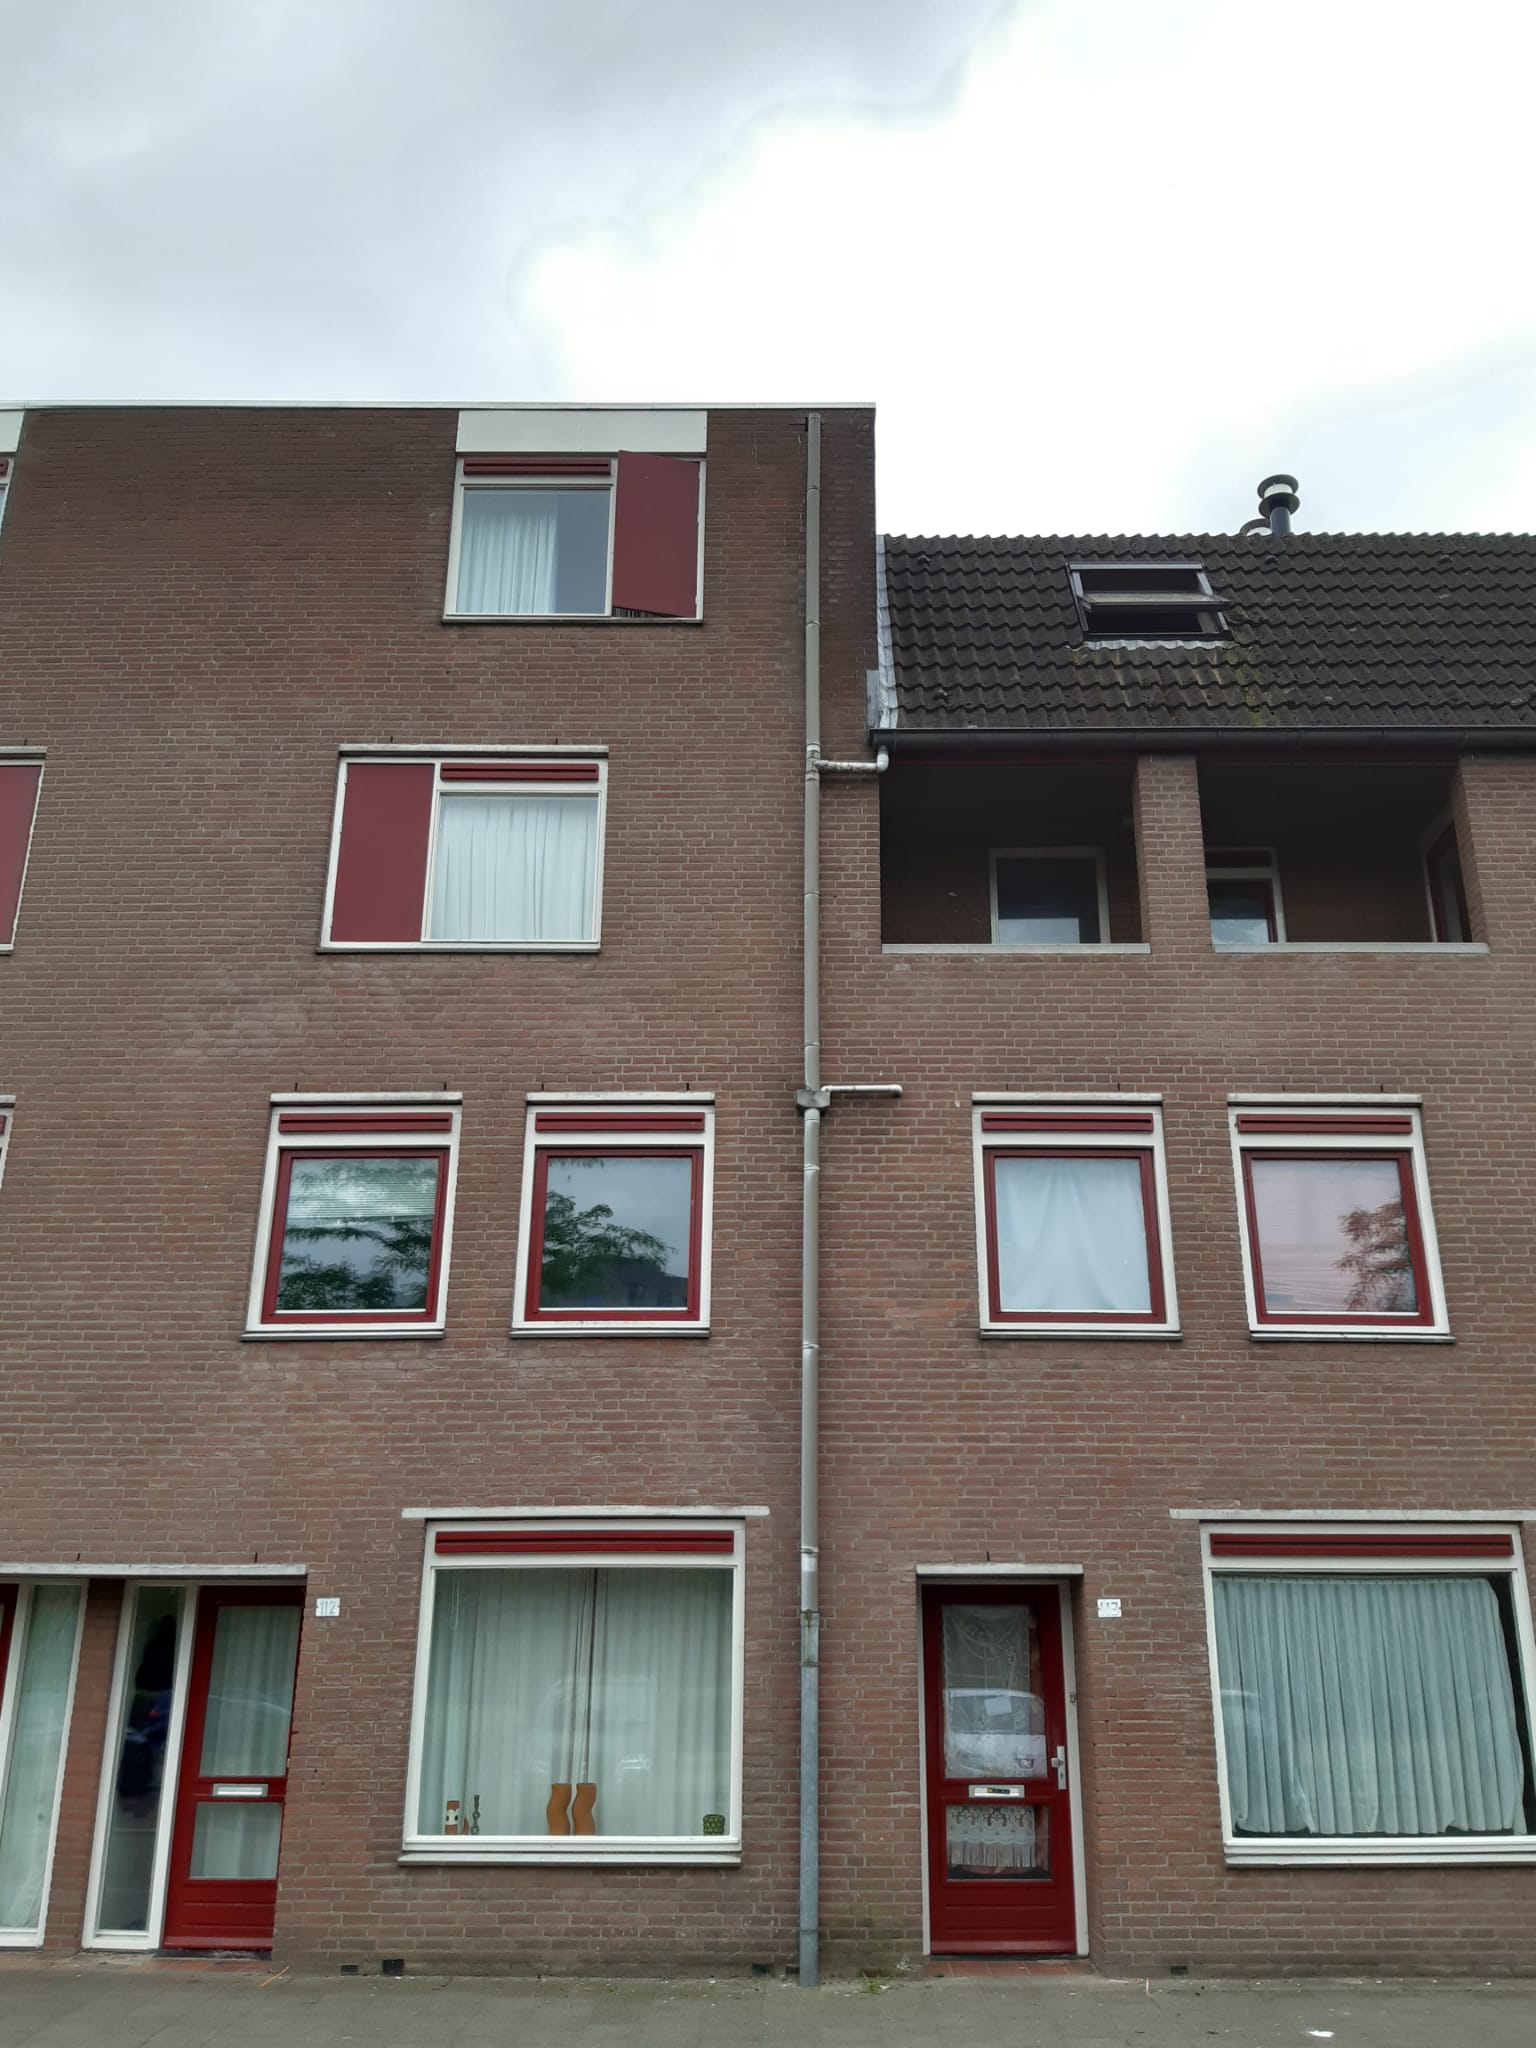 Spoorstraat 119, 4811 BH Breda, Nederland